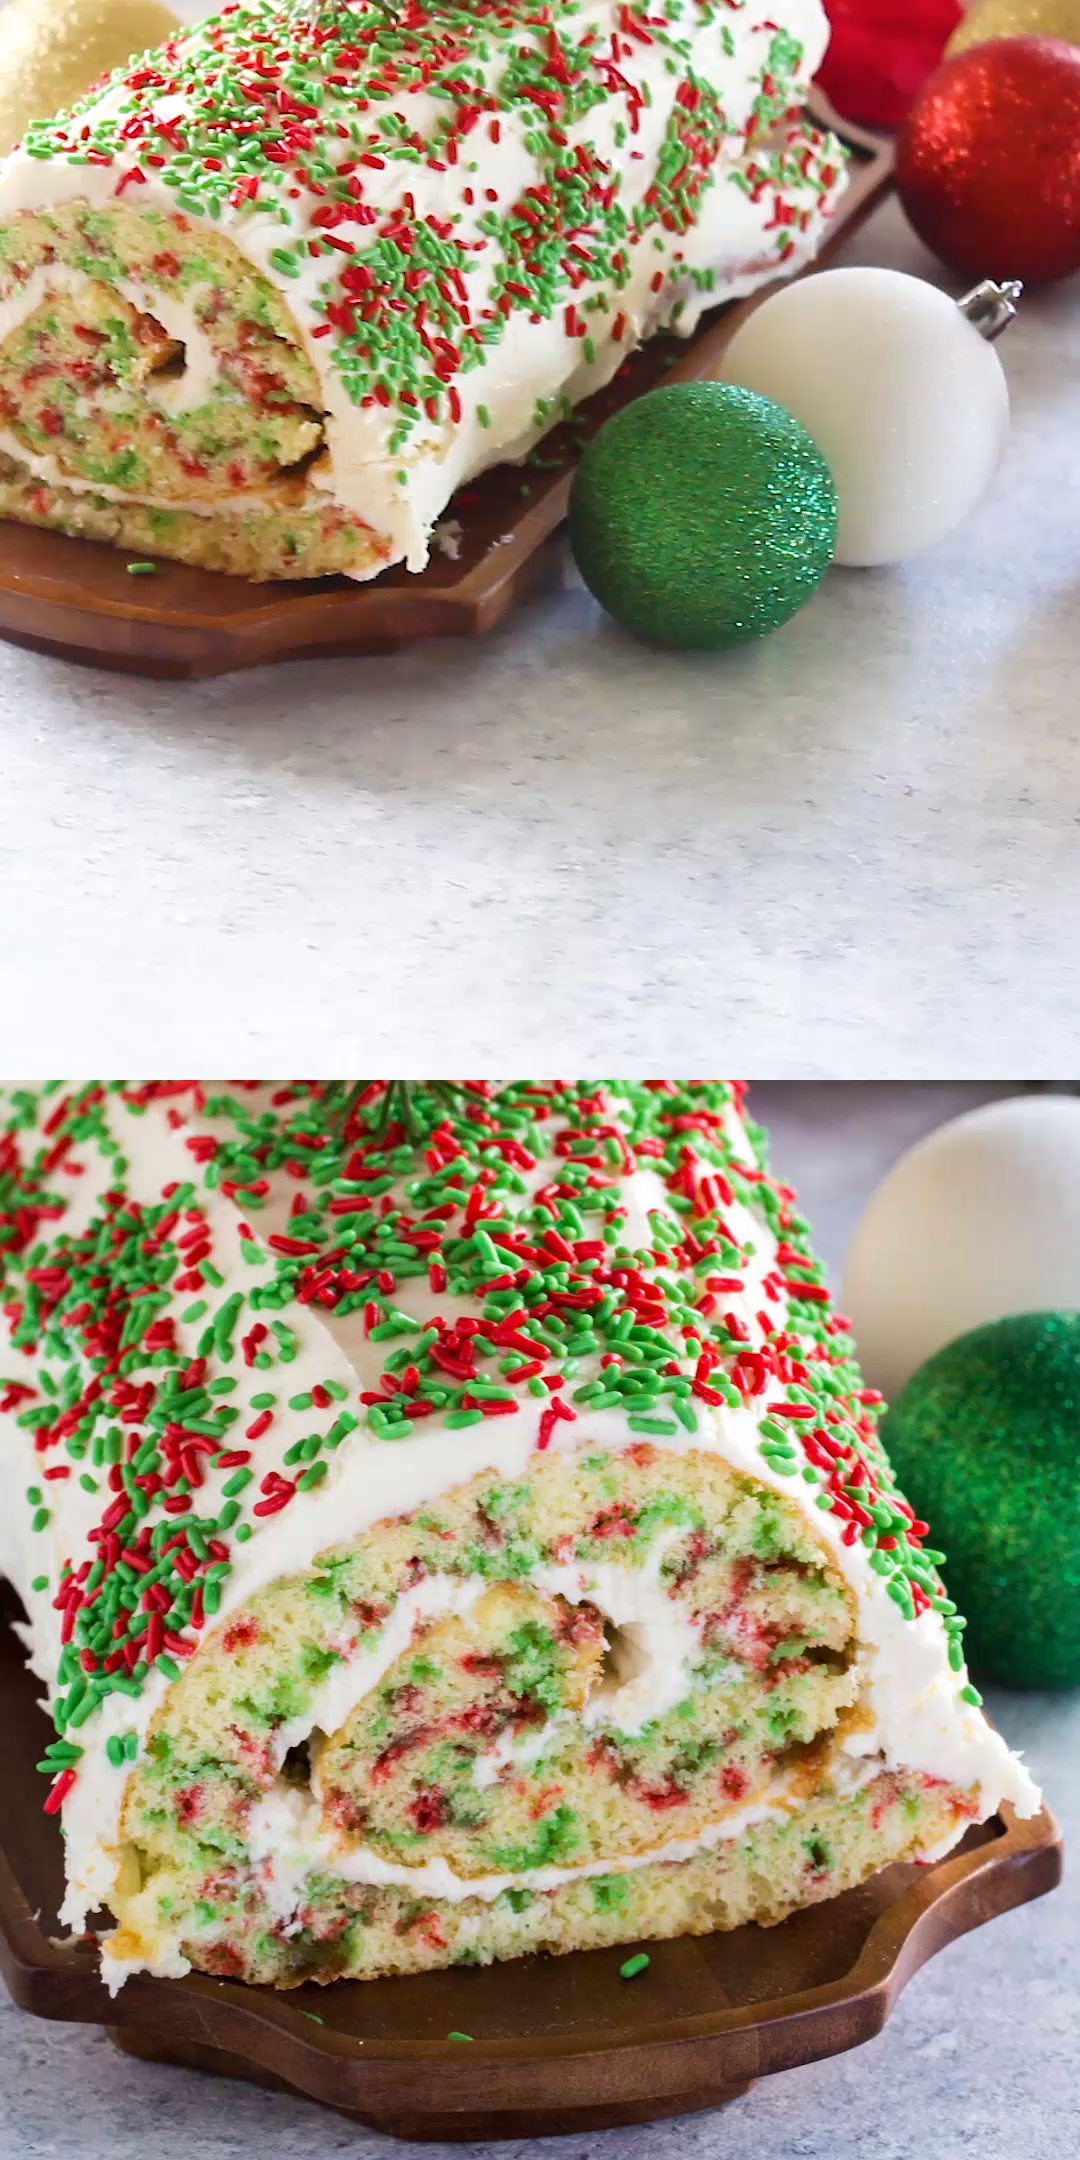 18 desserts Christmas cake ideas